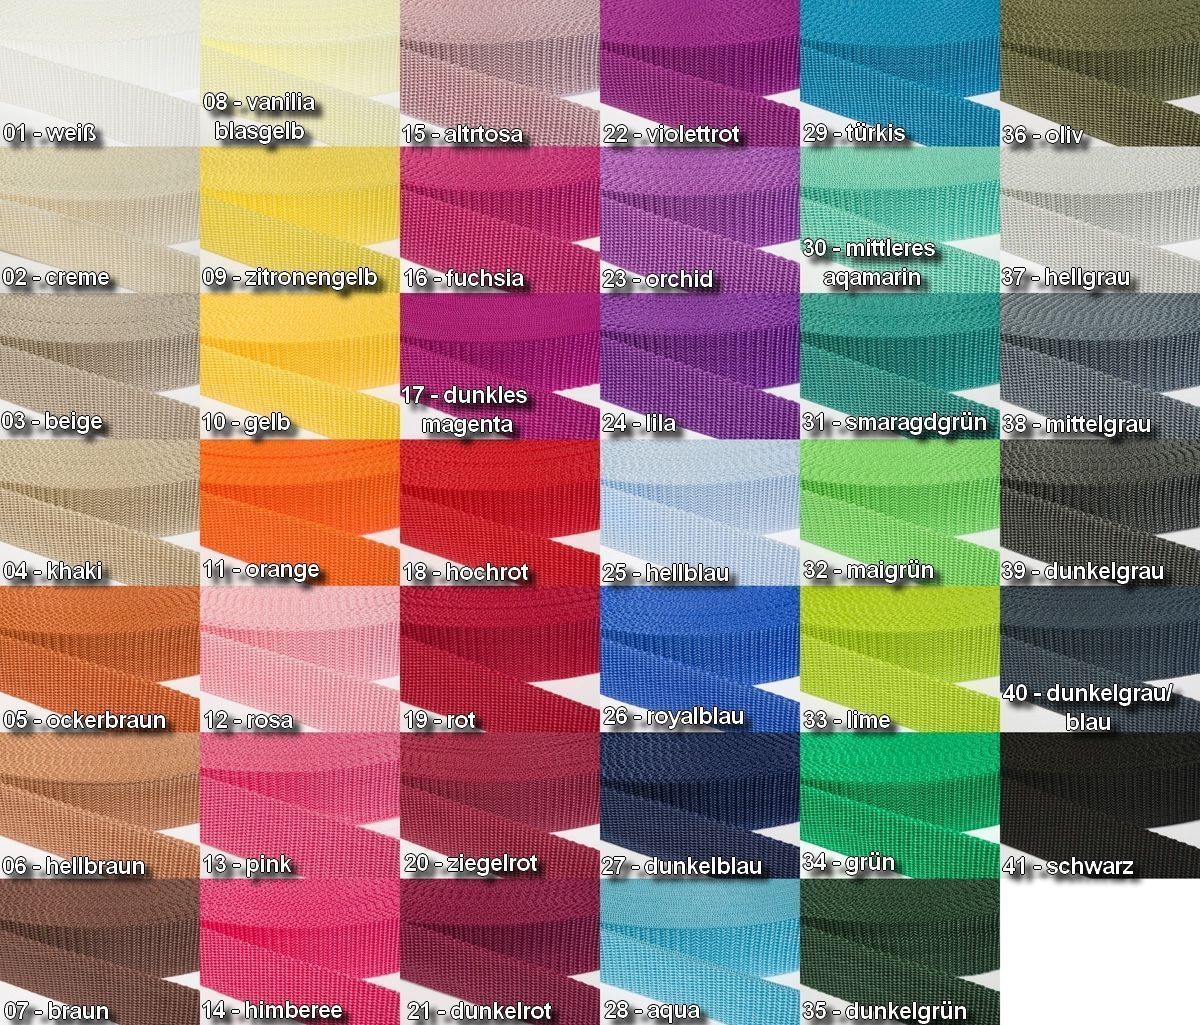 Gurtband 30mm breit aus Polypropylen in 41 Farben 35 - dunkelgrün 6 Meter